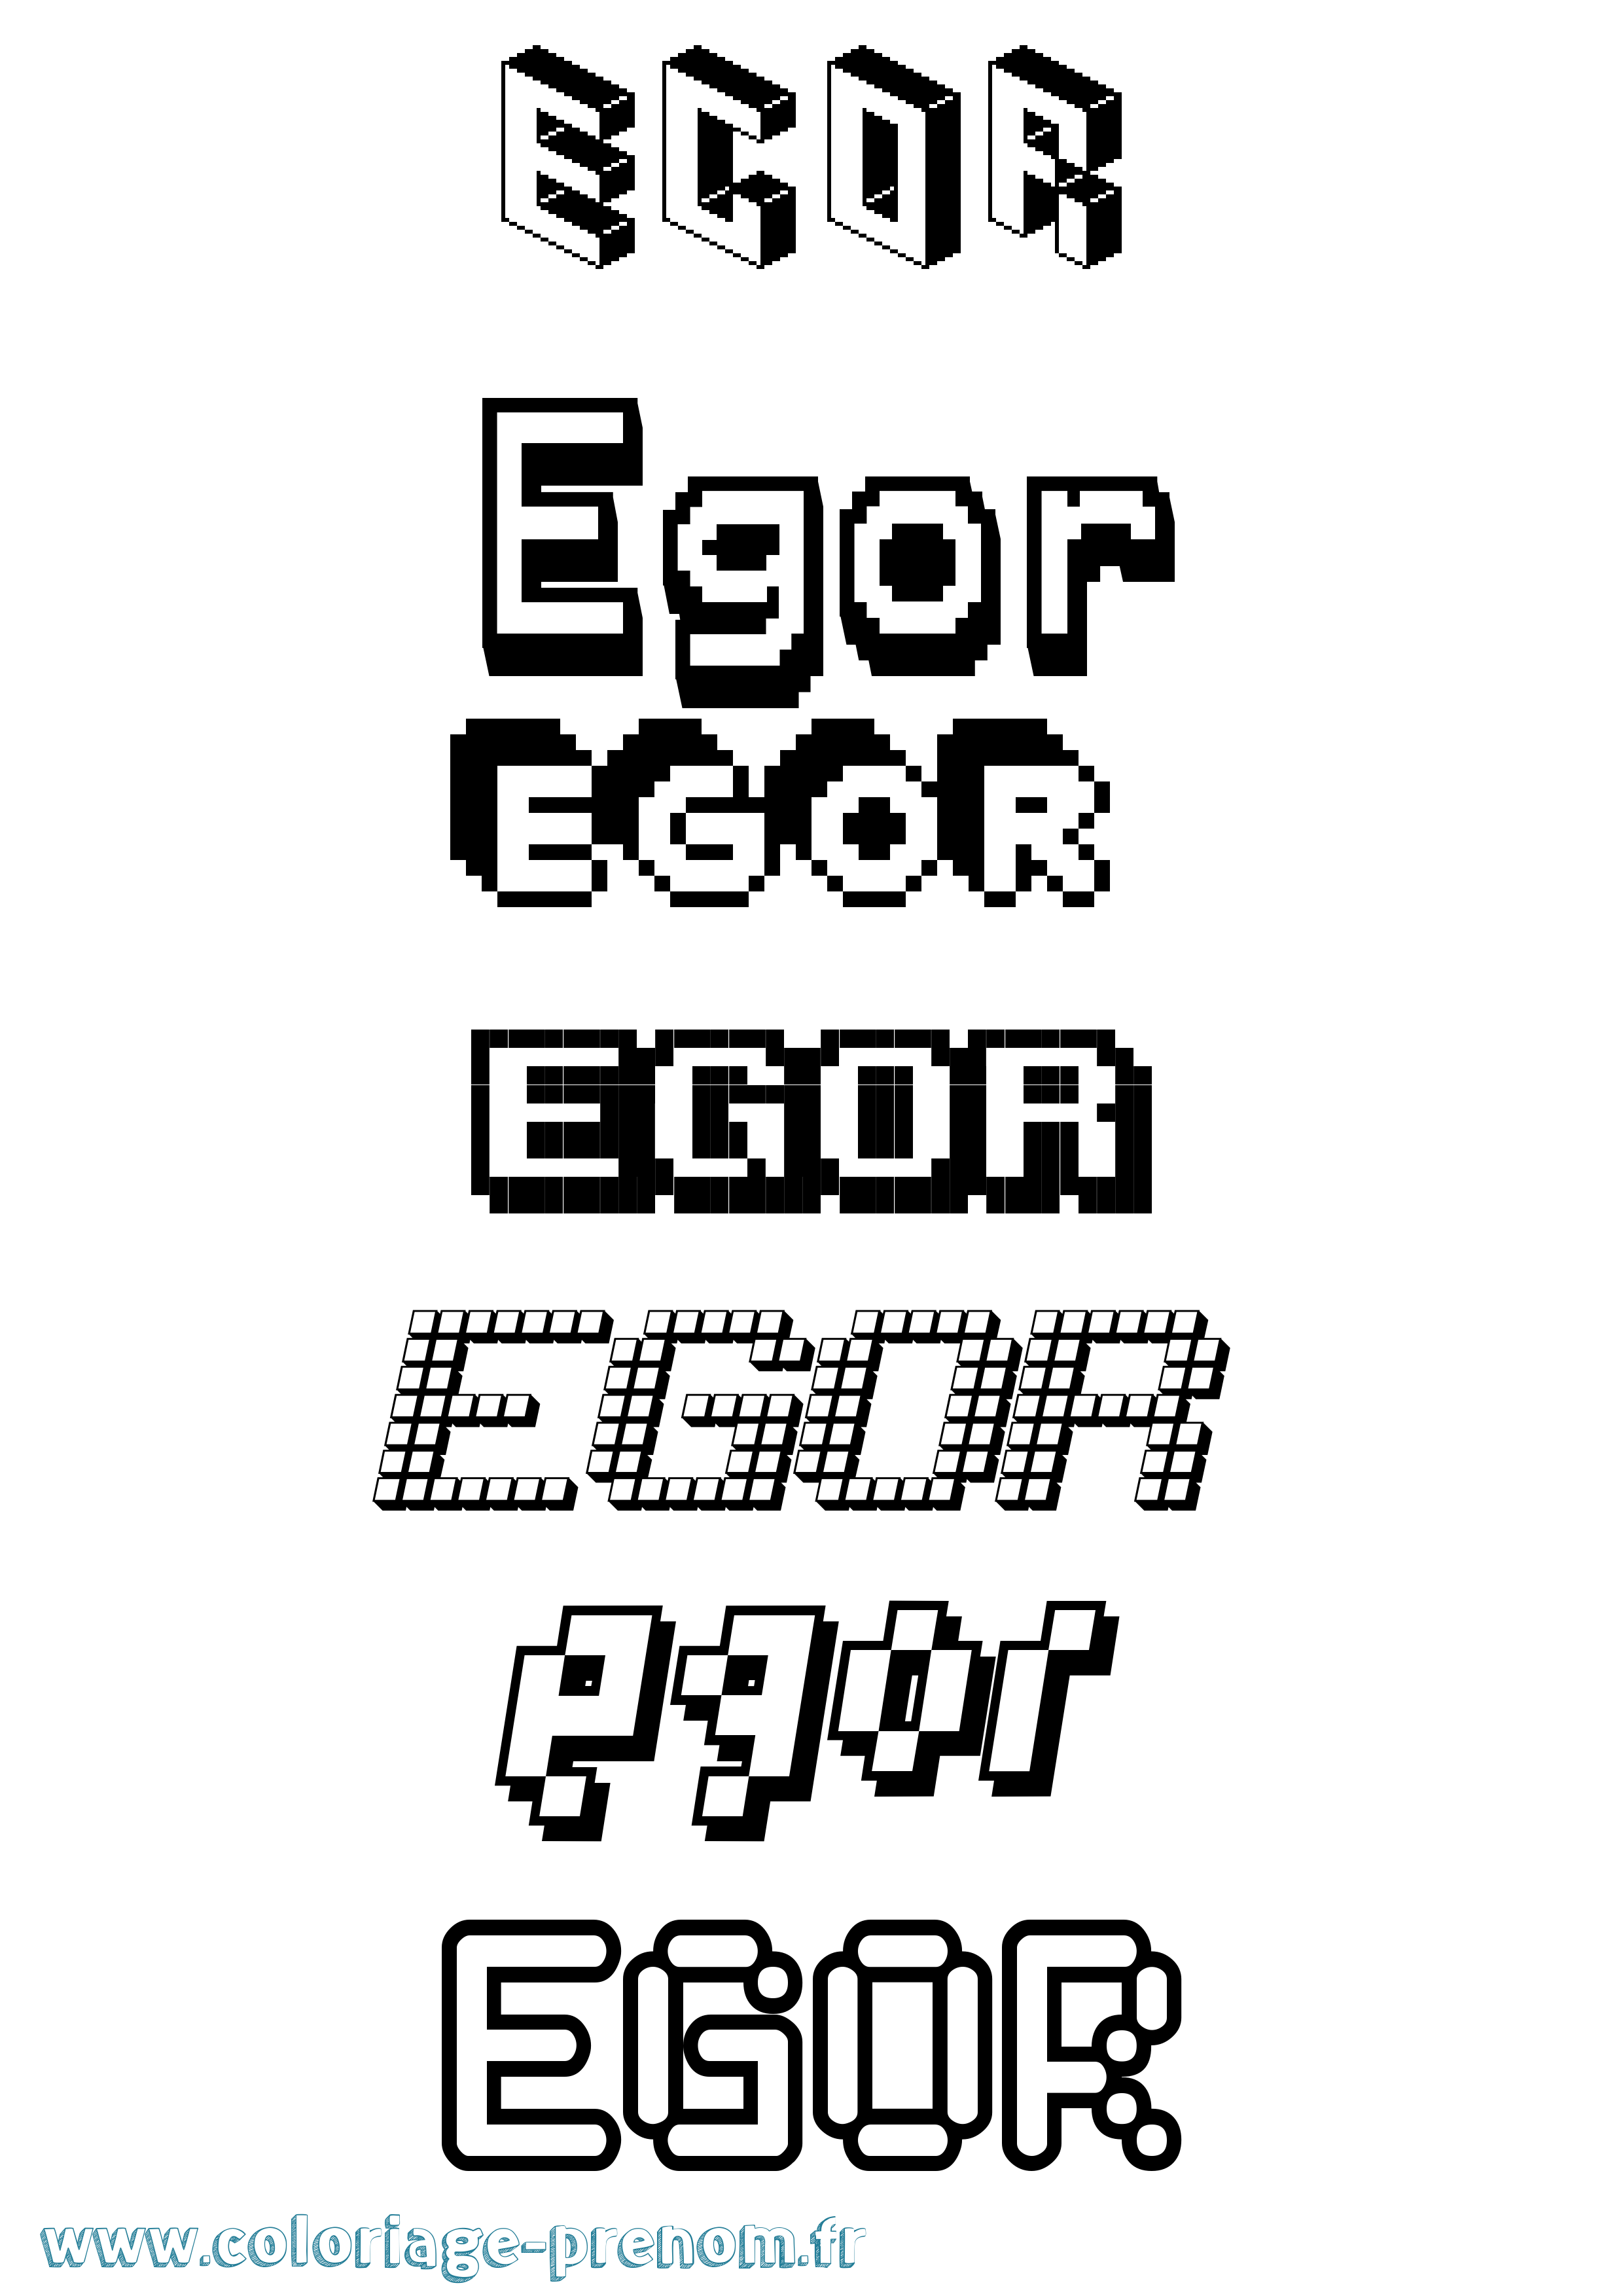 Coloriage prénom Egor Pixel